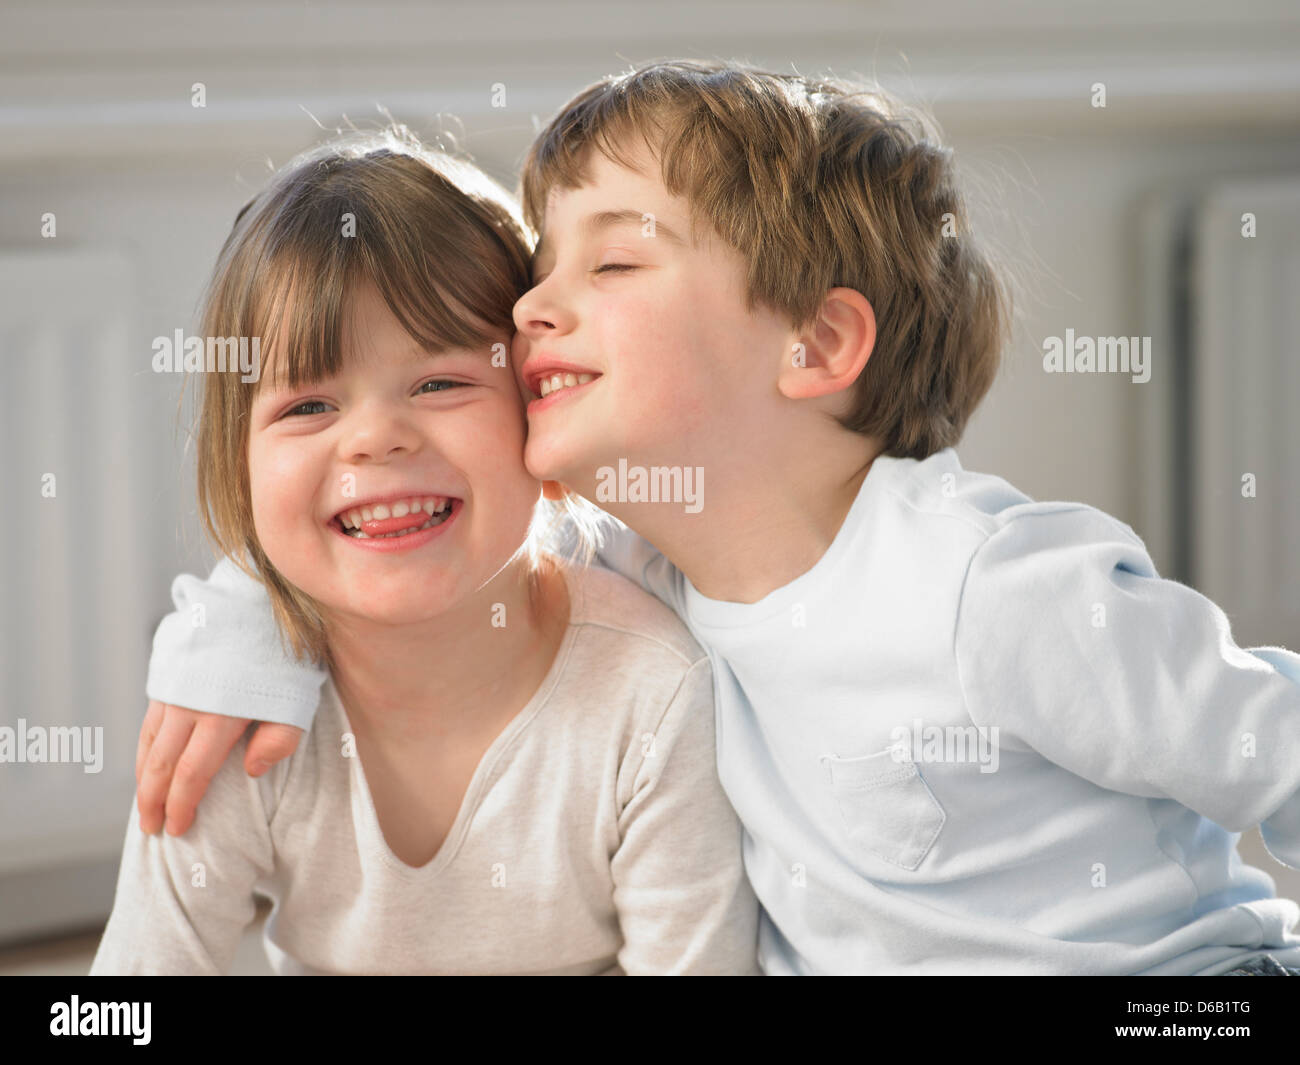 Smiling children hugging indoors Stock Photo